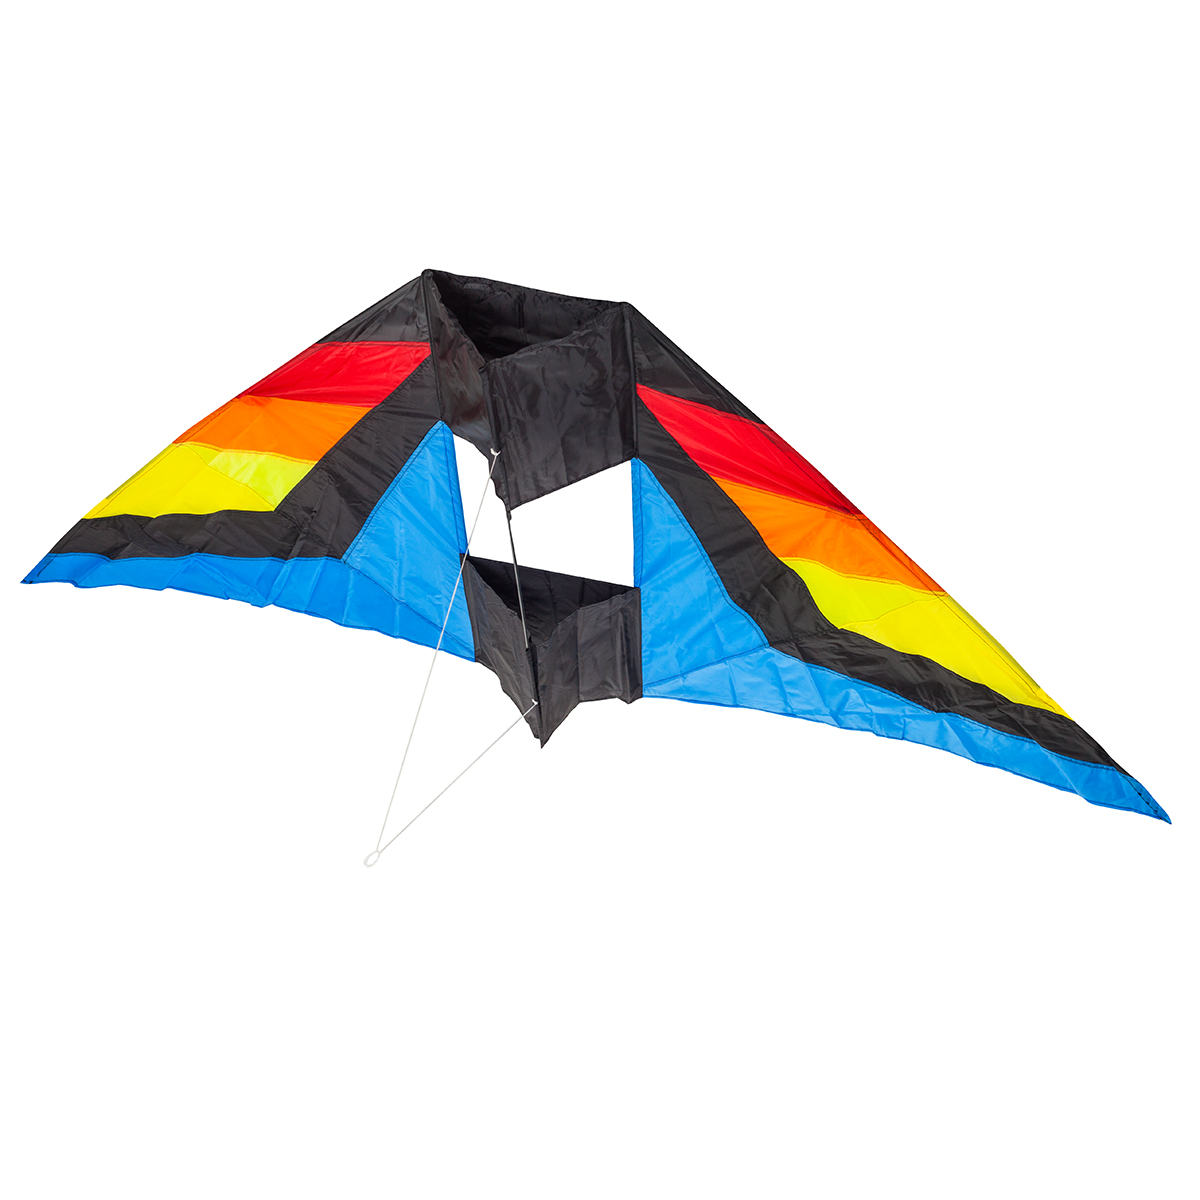 bereik Wet en regelgeving deelnemer Kite | Thimble Toys